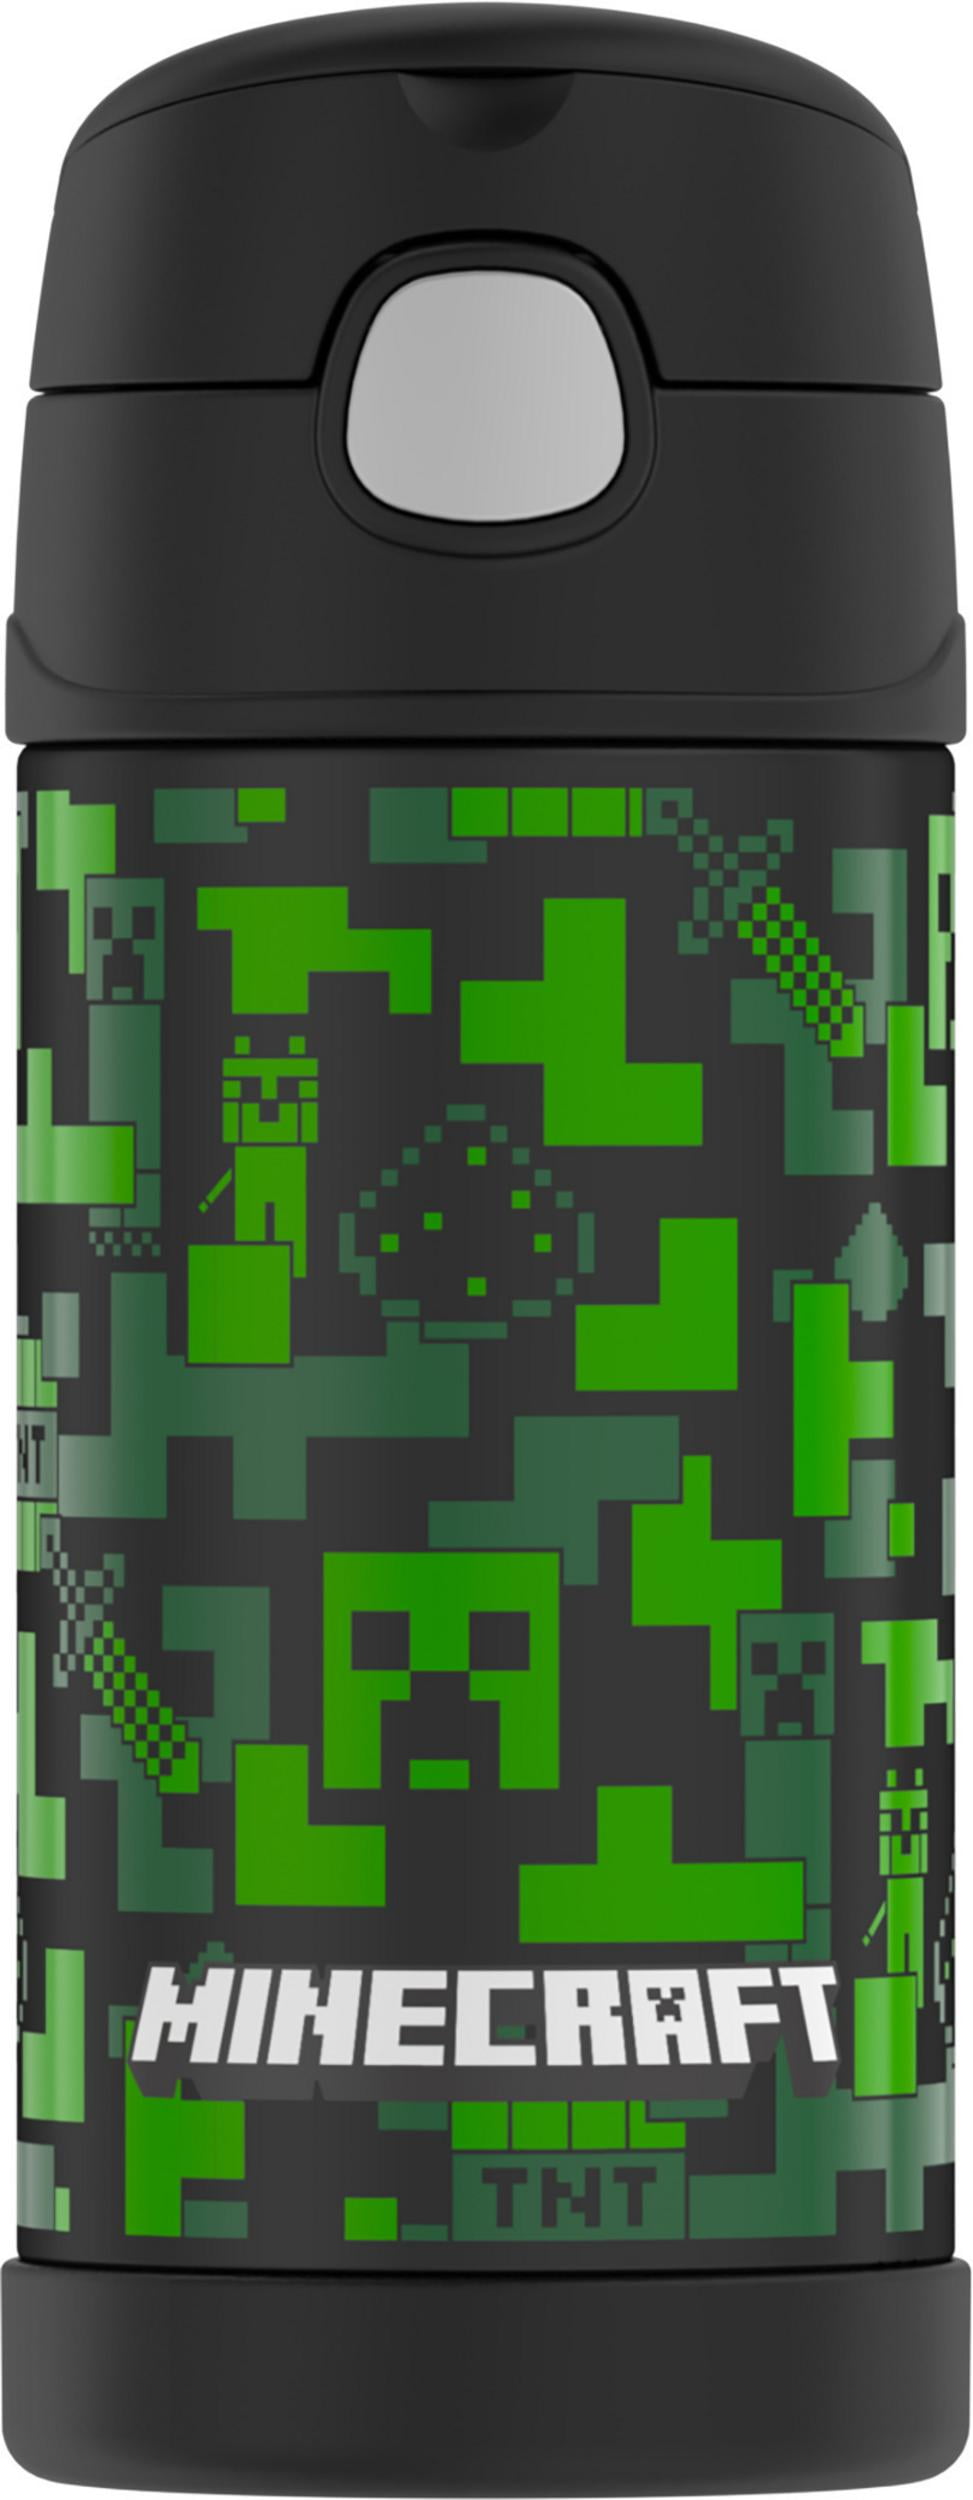 Minecraft Creeper - Thermos 12oz/355mL SEALED